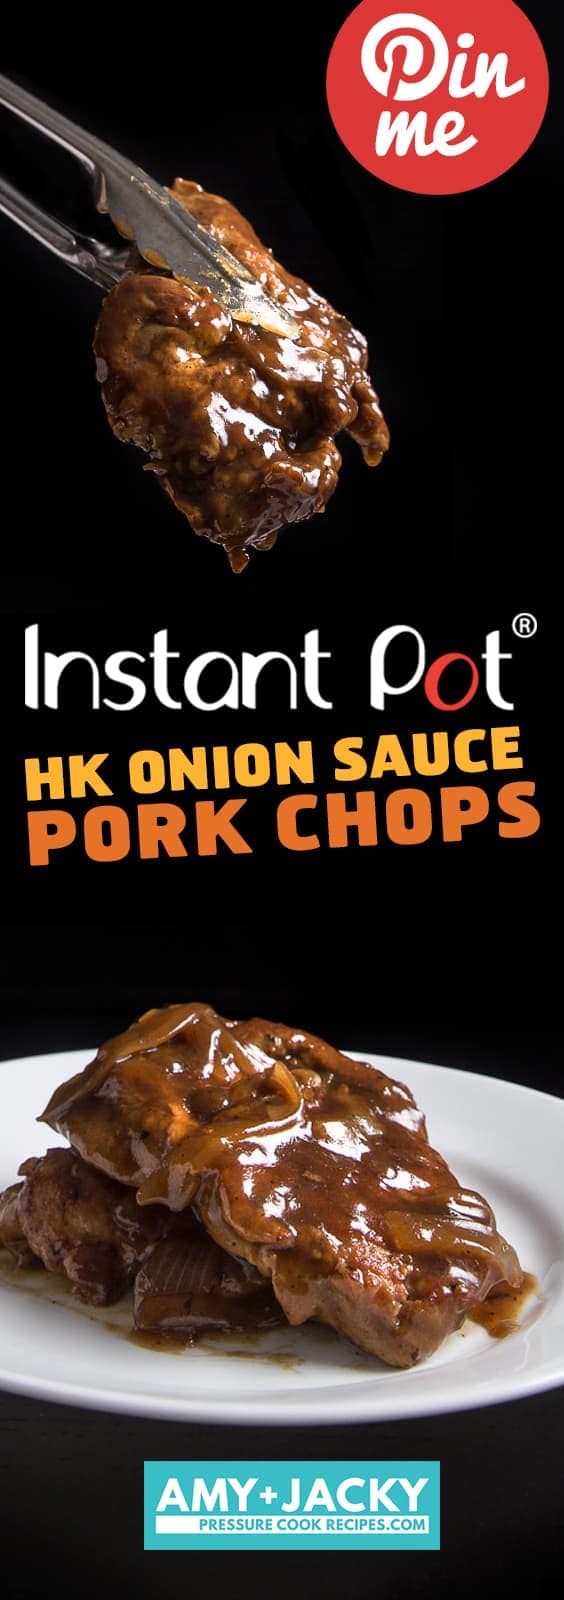 https://pressurecookrecipes.com/wp-content/uploads/2016/08/instant-pot-pork-chops-onion-p.jpg